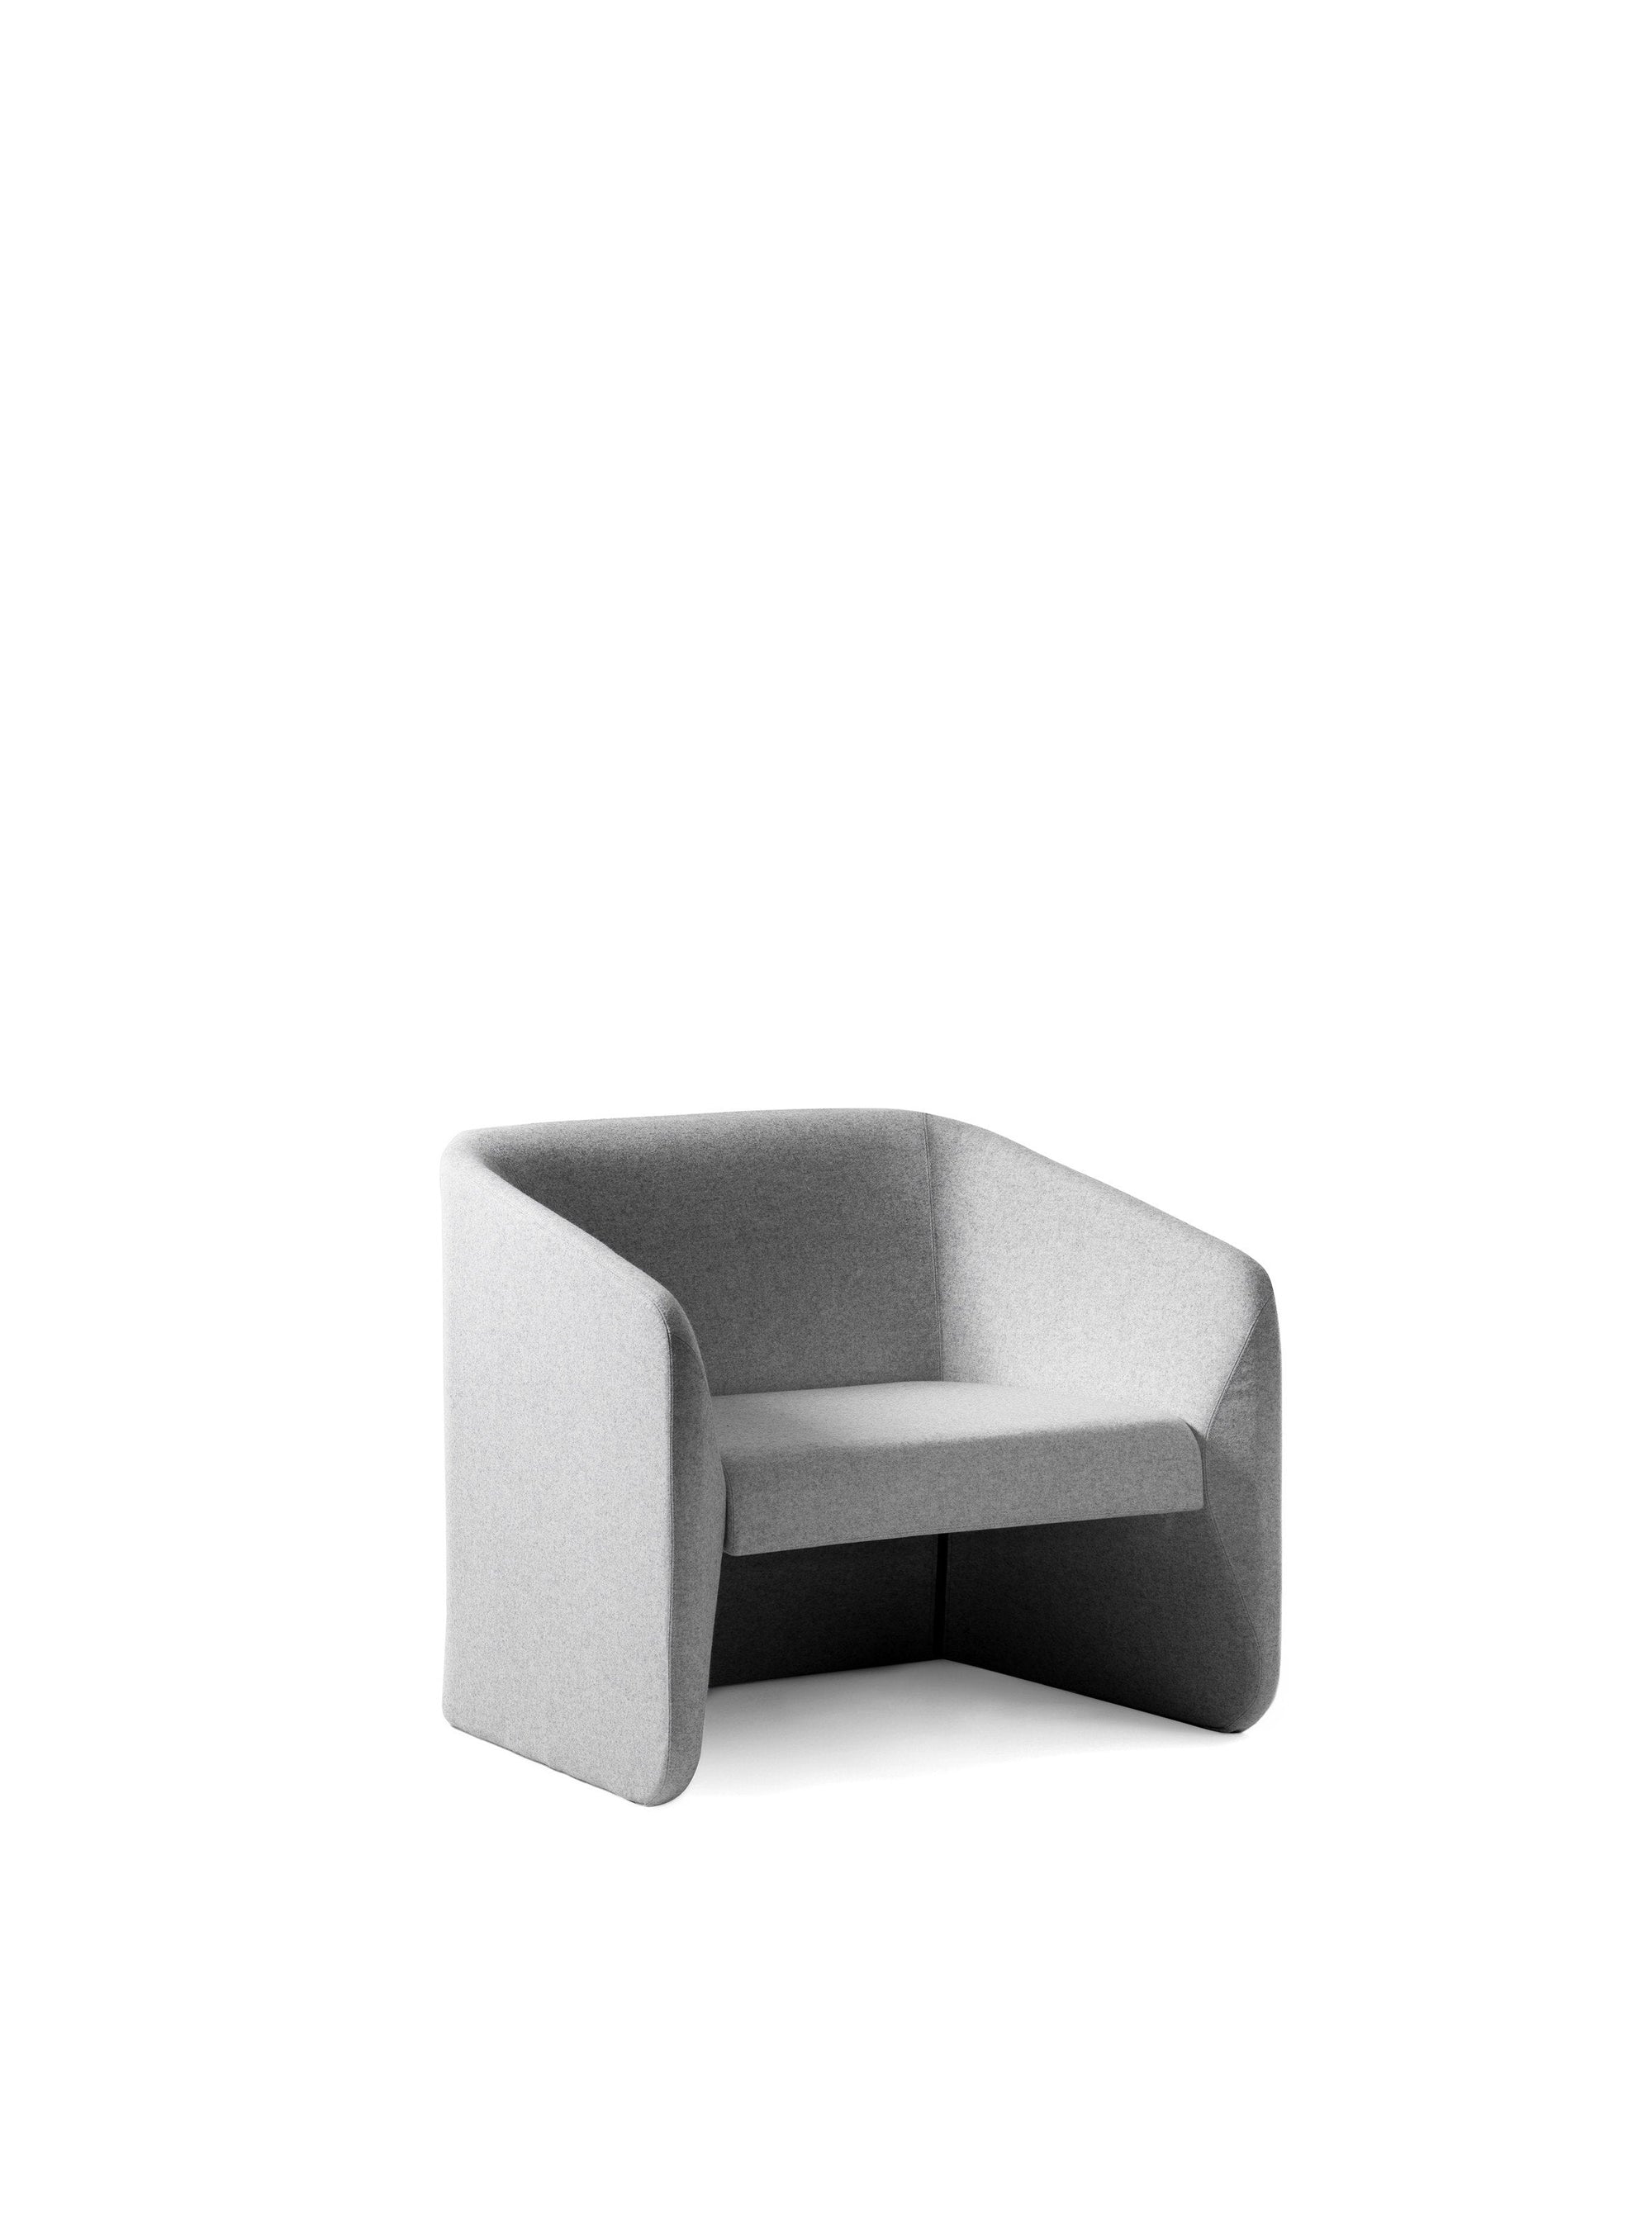 Race Lounge Chair-Johanson Design-Contract Furniture Store